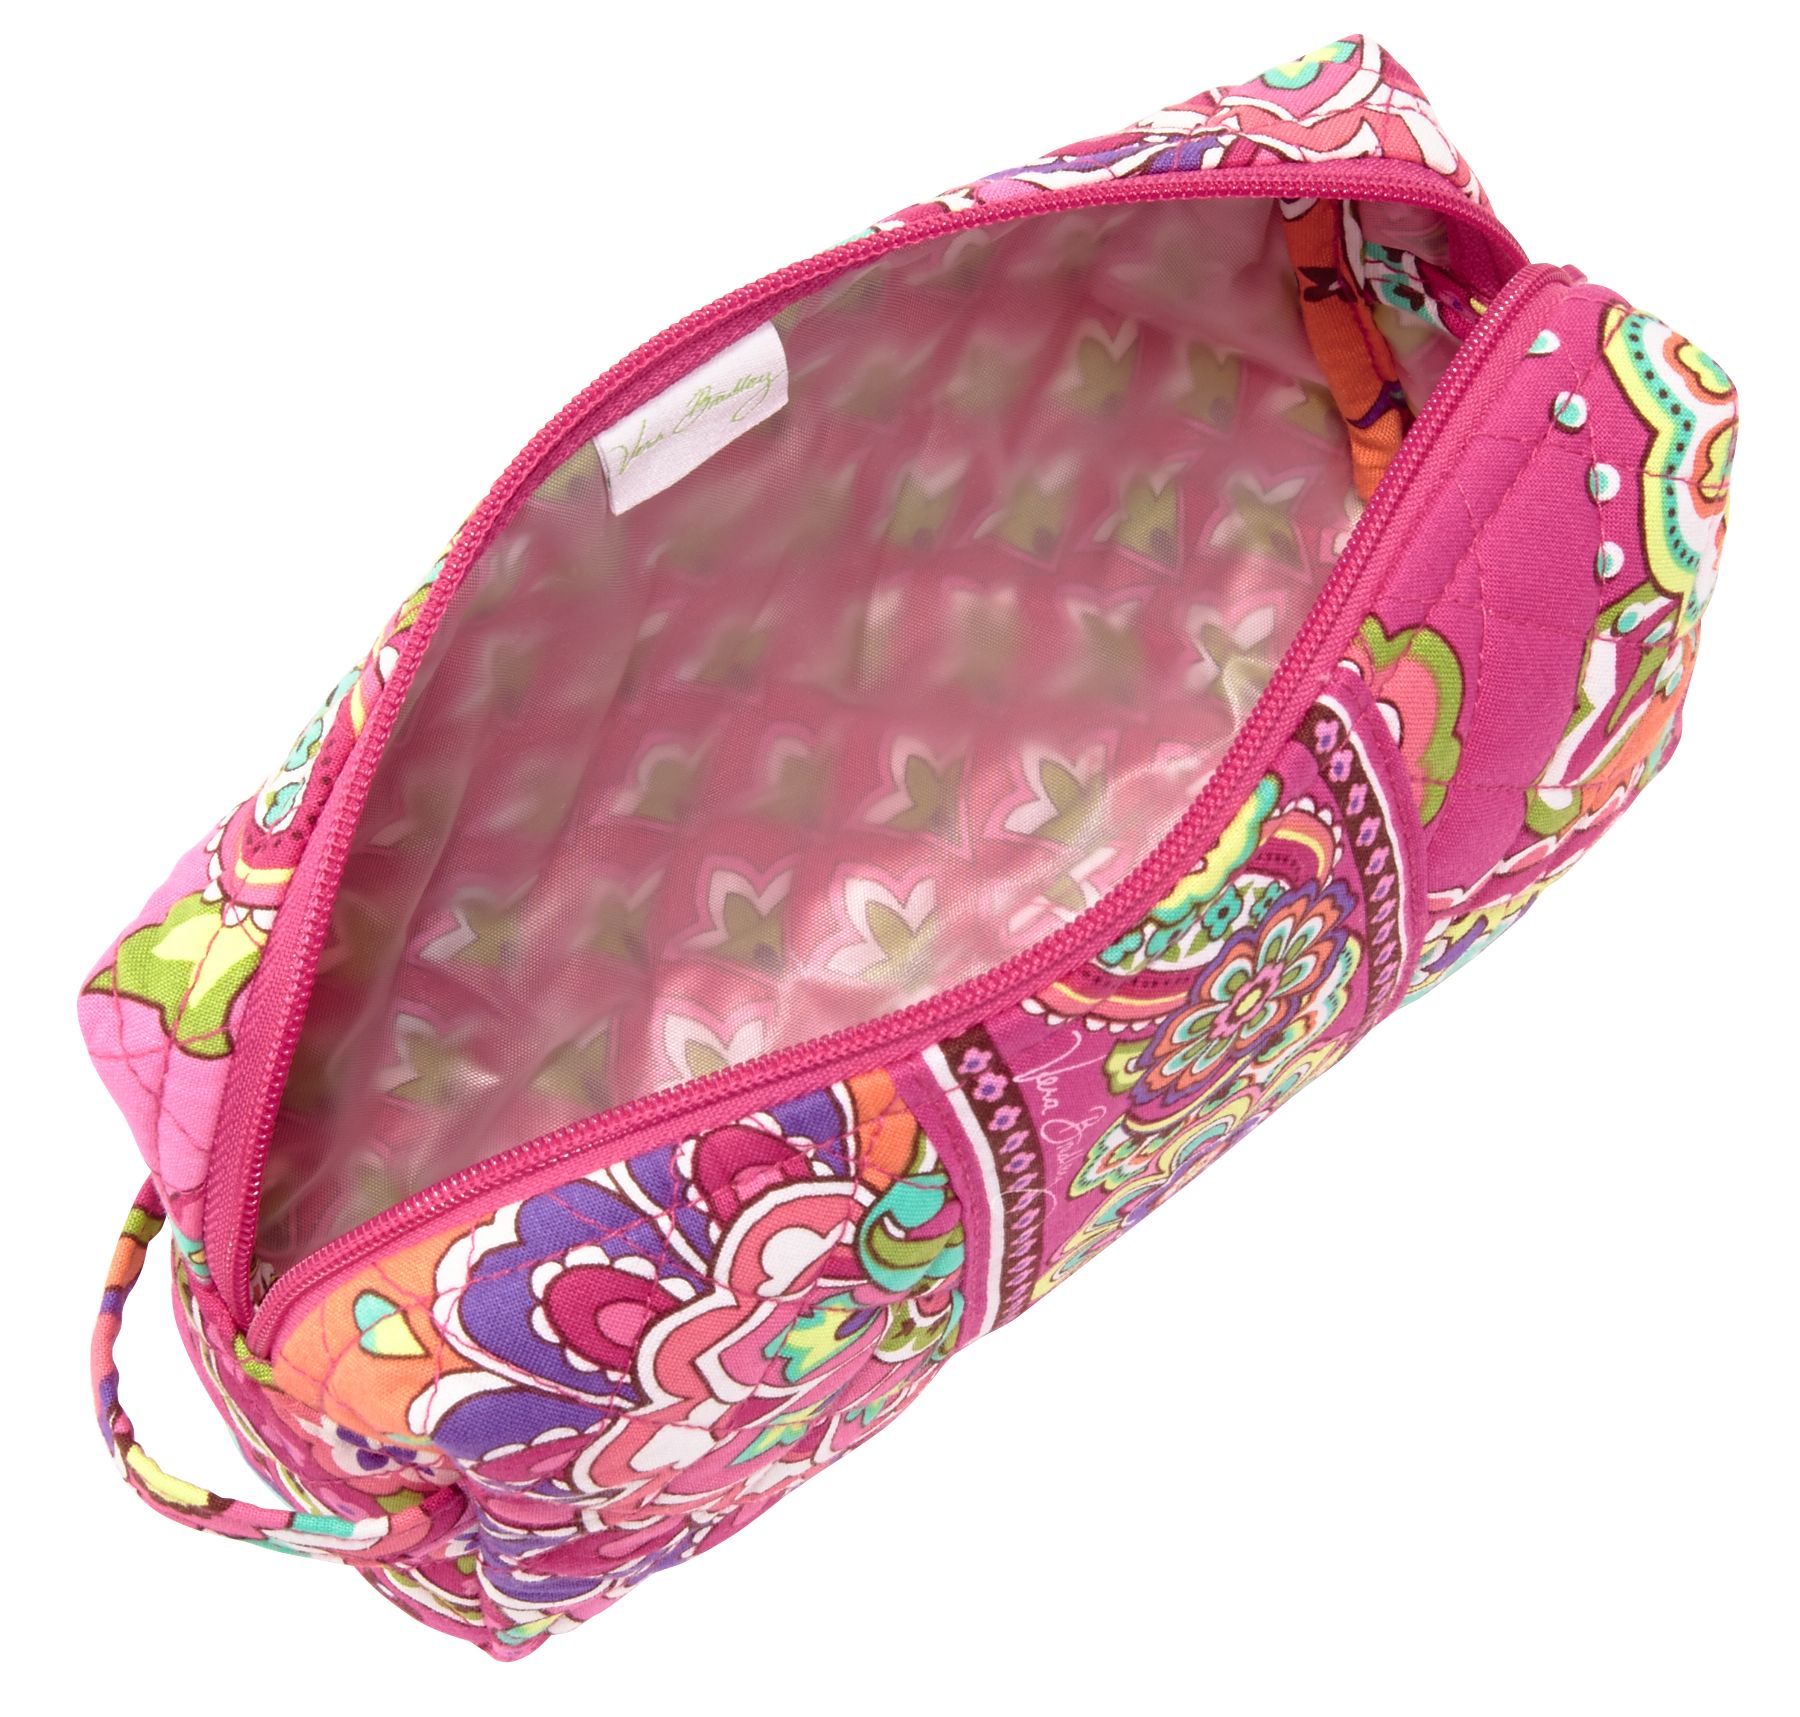 Vera Bradley Medium Cosmetic Bag | eBay